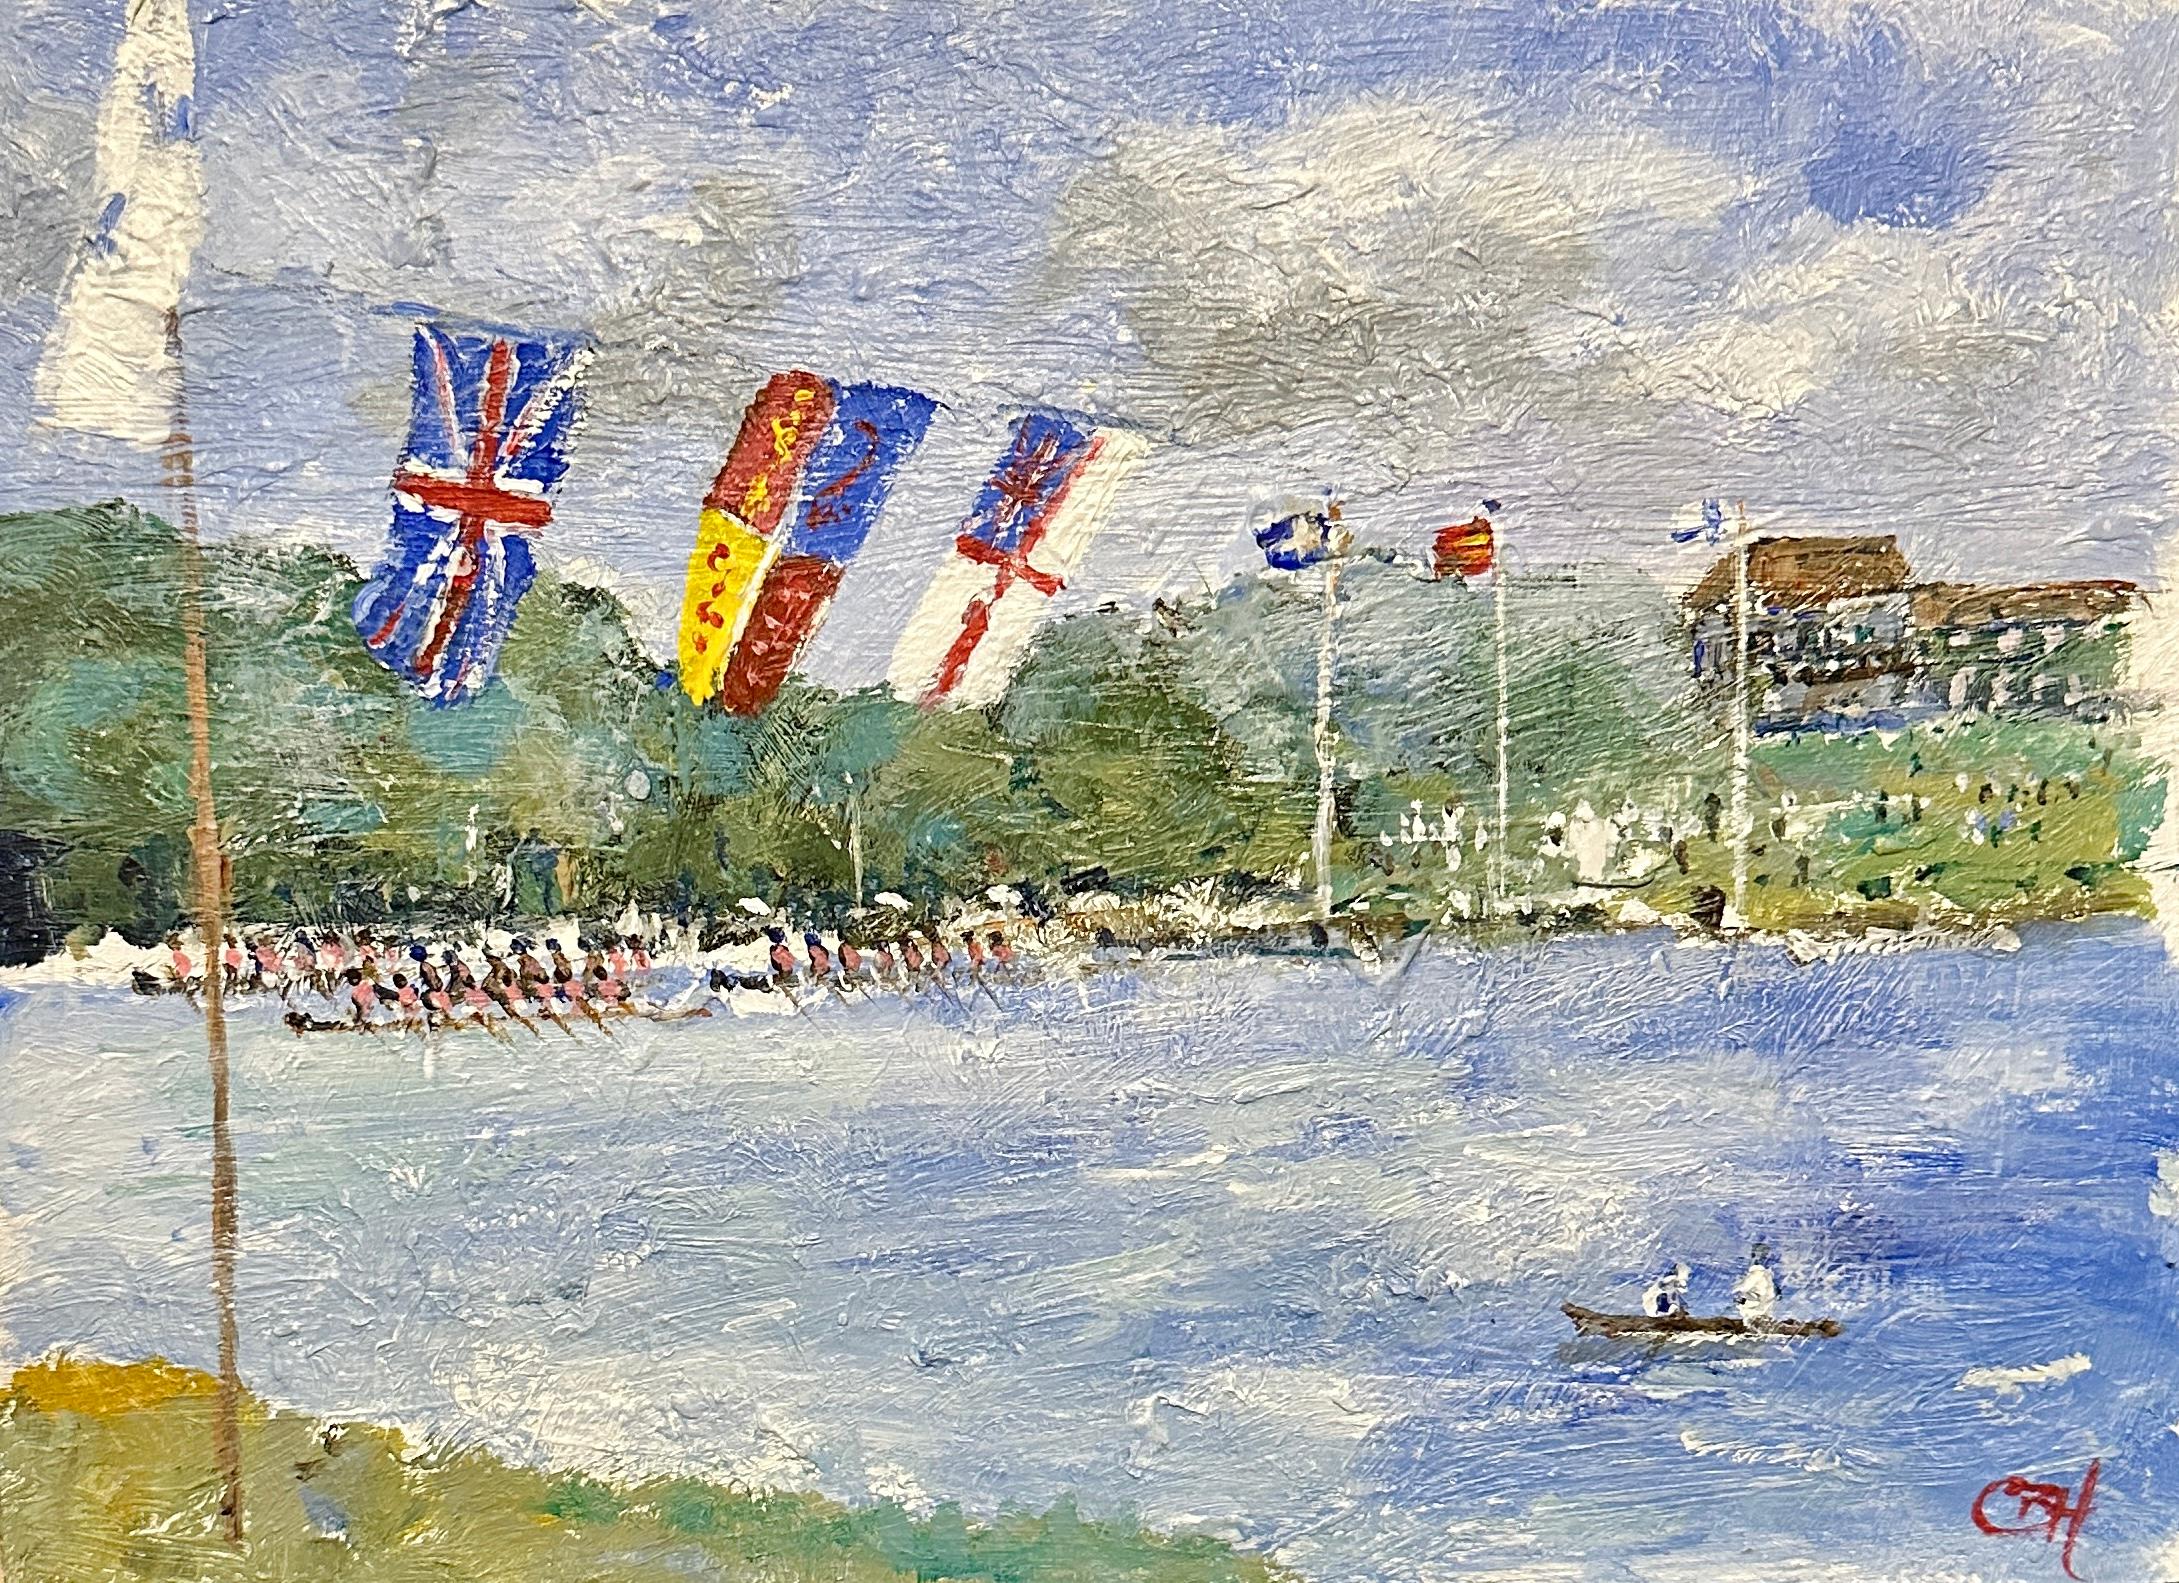 20th century Modern British , Henley Regatta, Rowing scene on the Thames UK